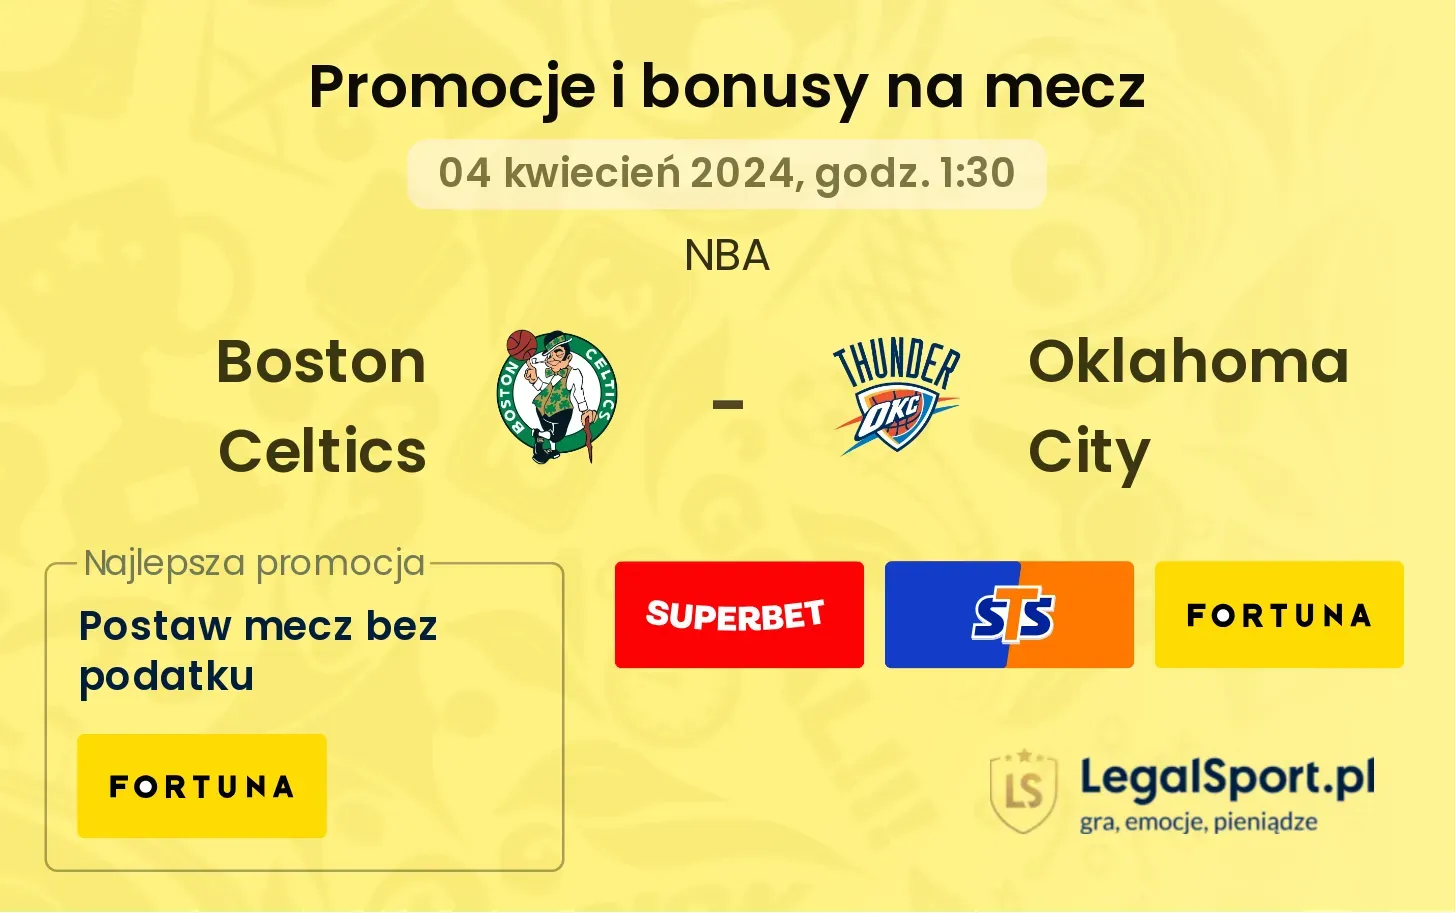 Boston Celtics - Oklahoma City promocje bonusy na mecz